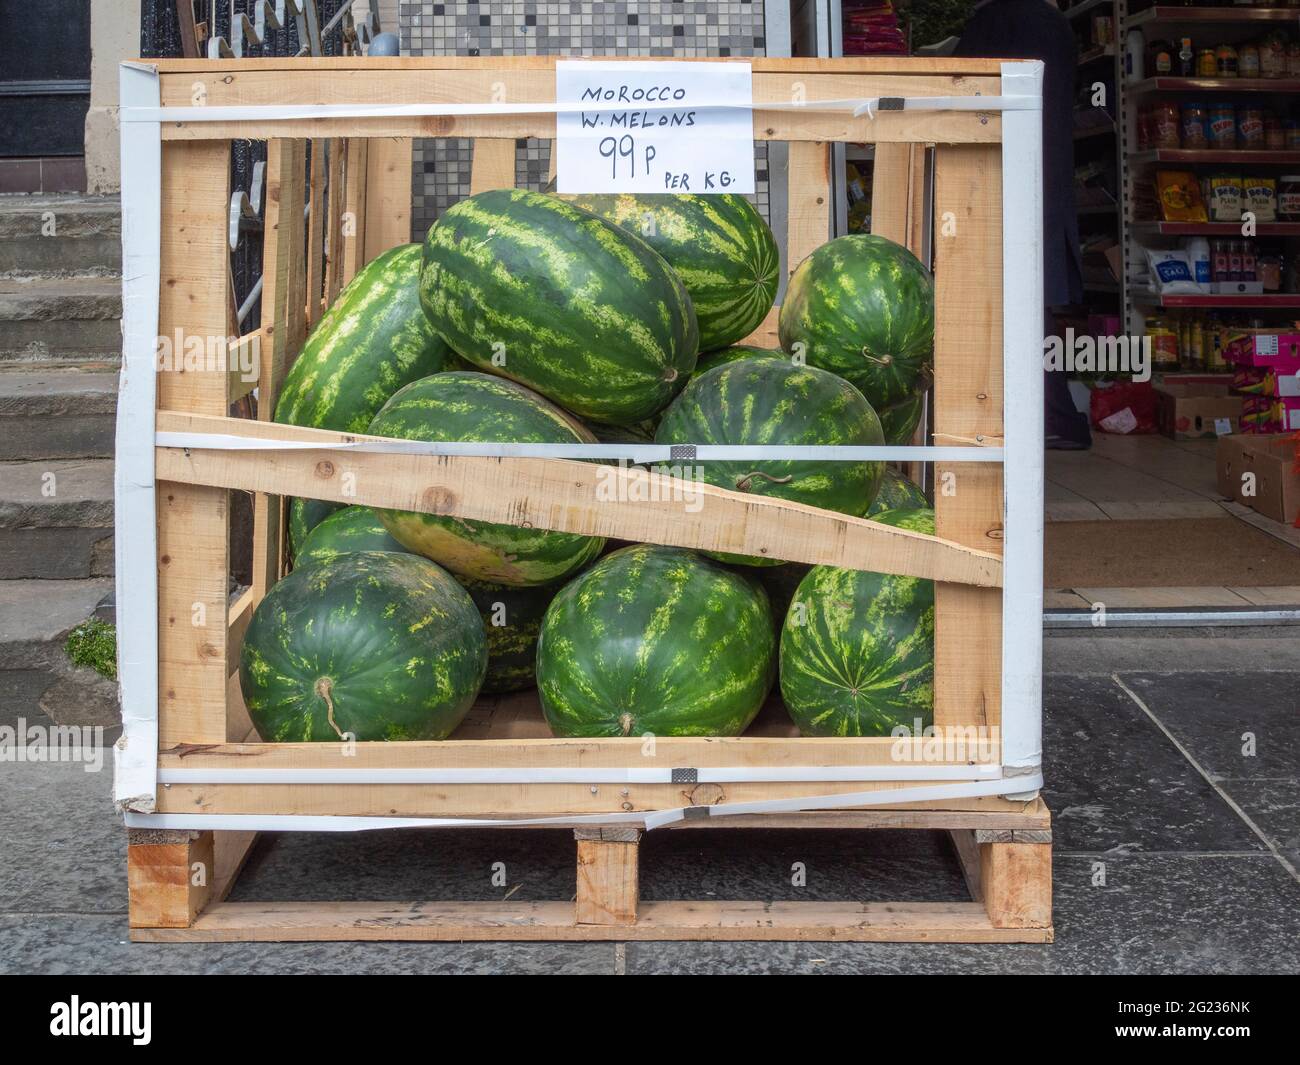 Crate of Moroccan Watermelons for sale, Edinburgh, Scotland, UK. Stock Photo